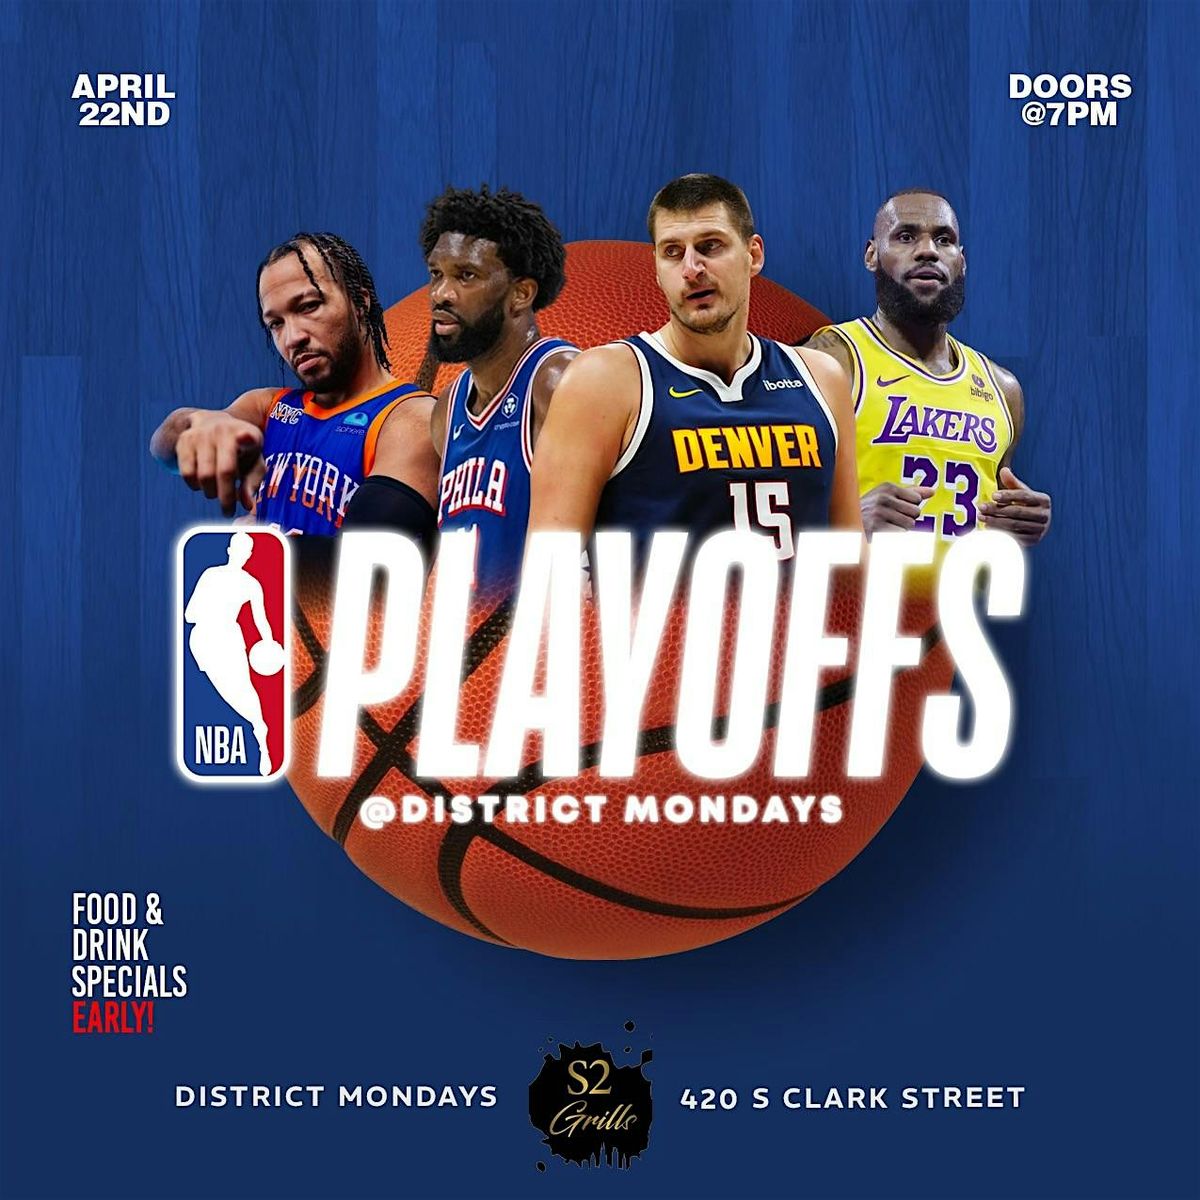 NBA Playoffs! District Mondays Downtown! Industry Night! RSVP!